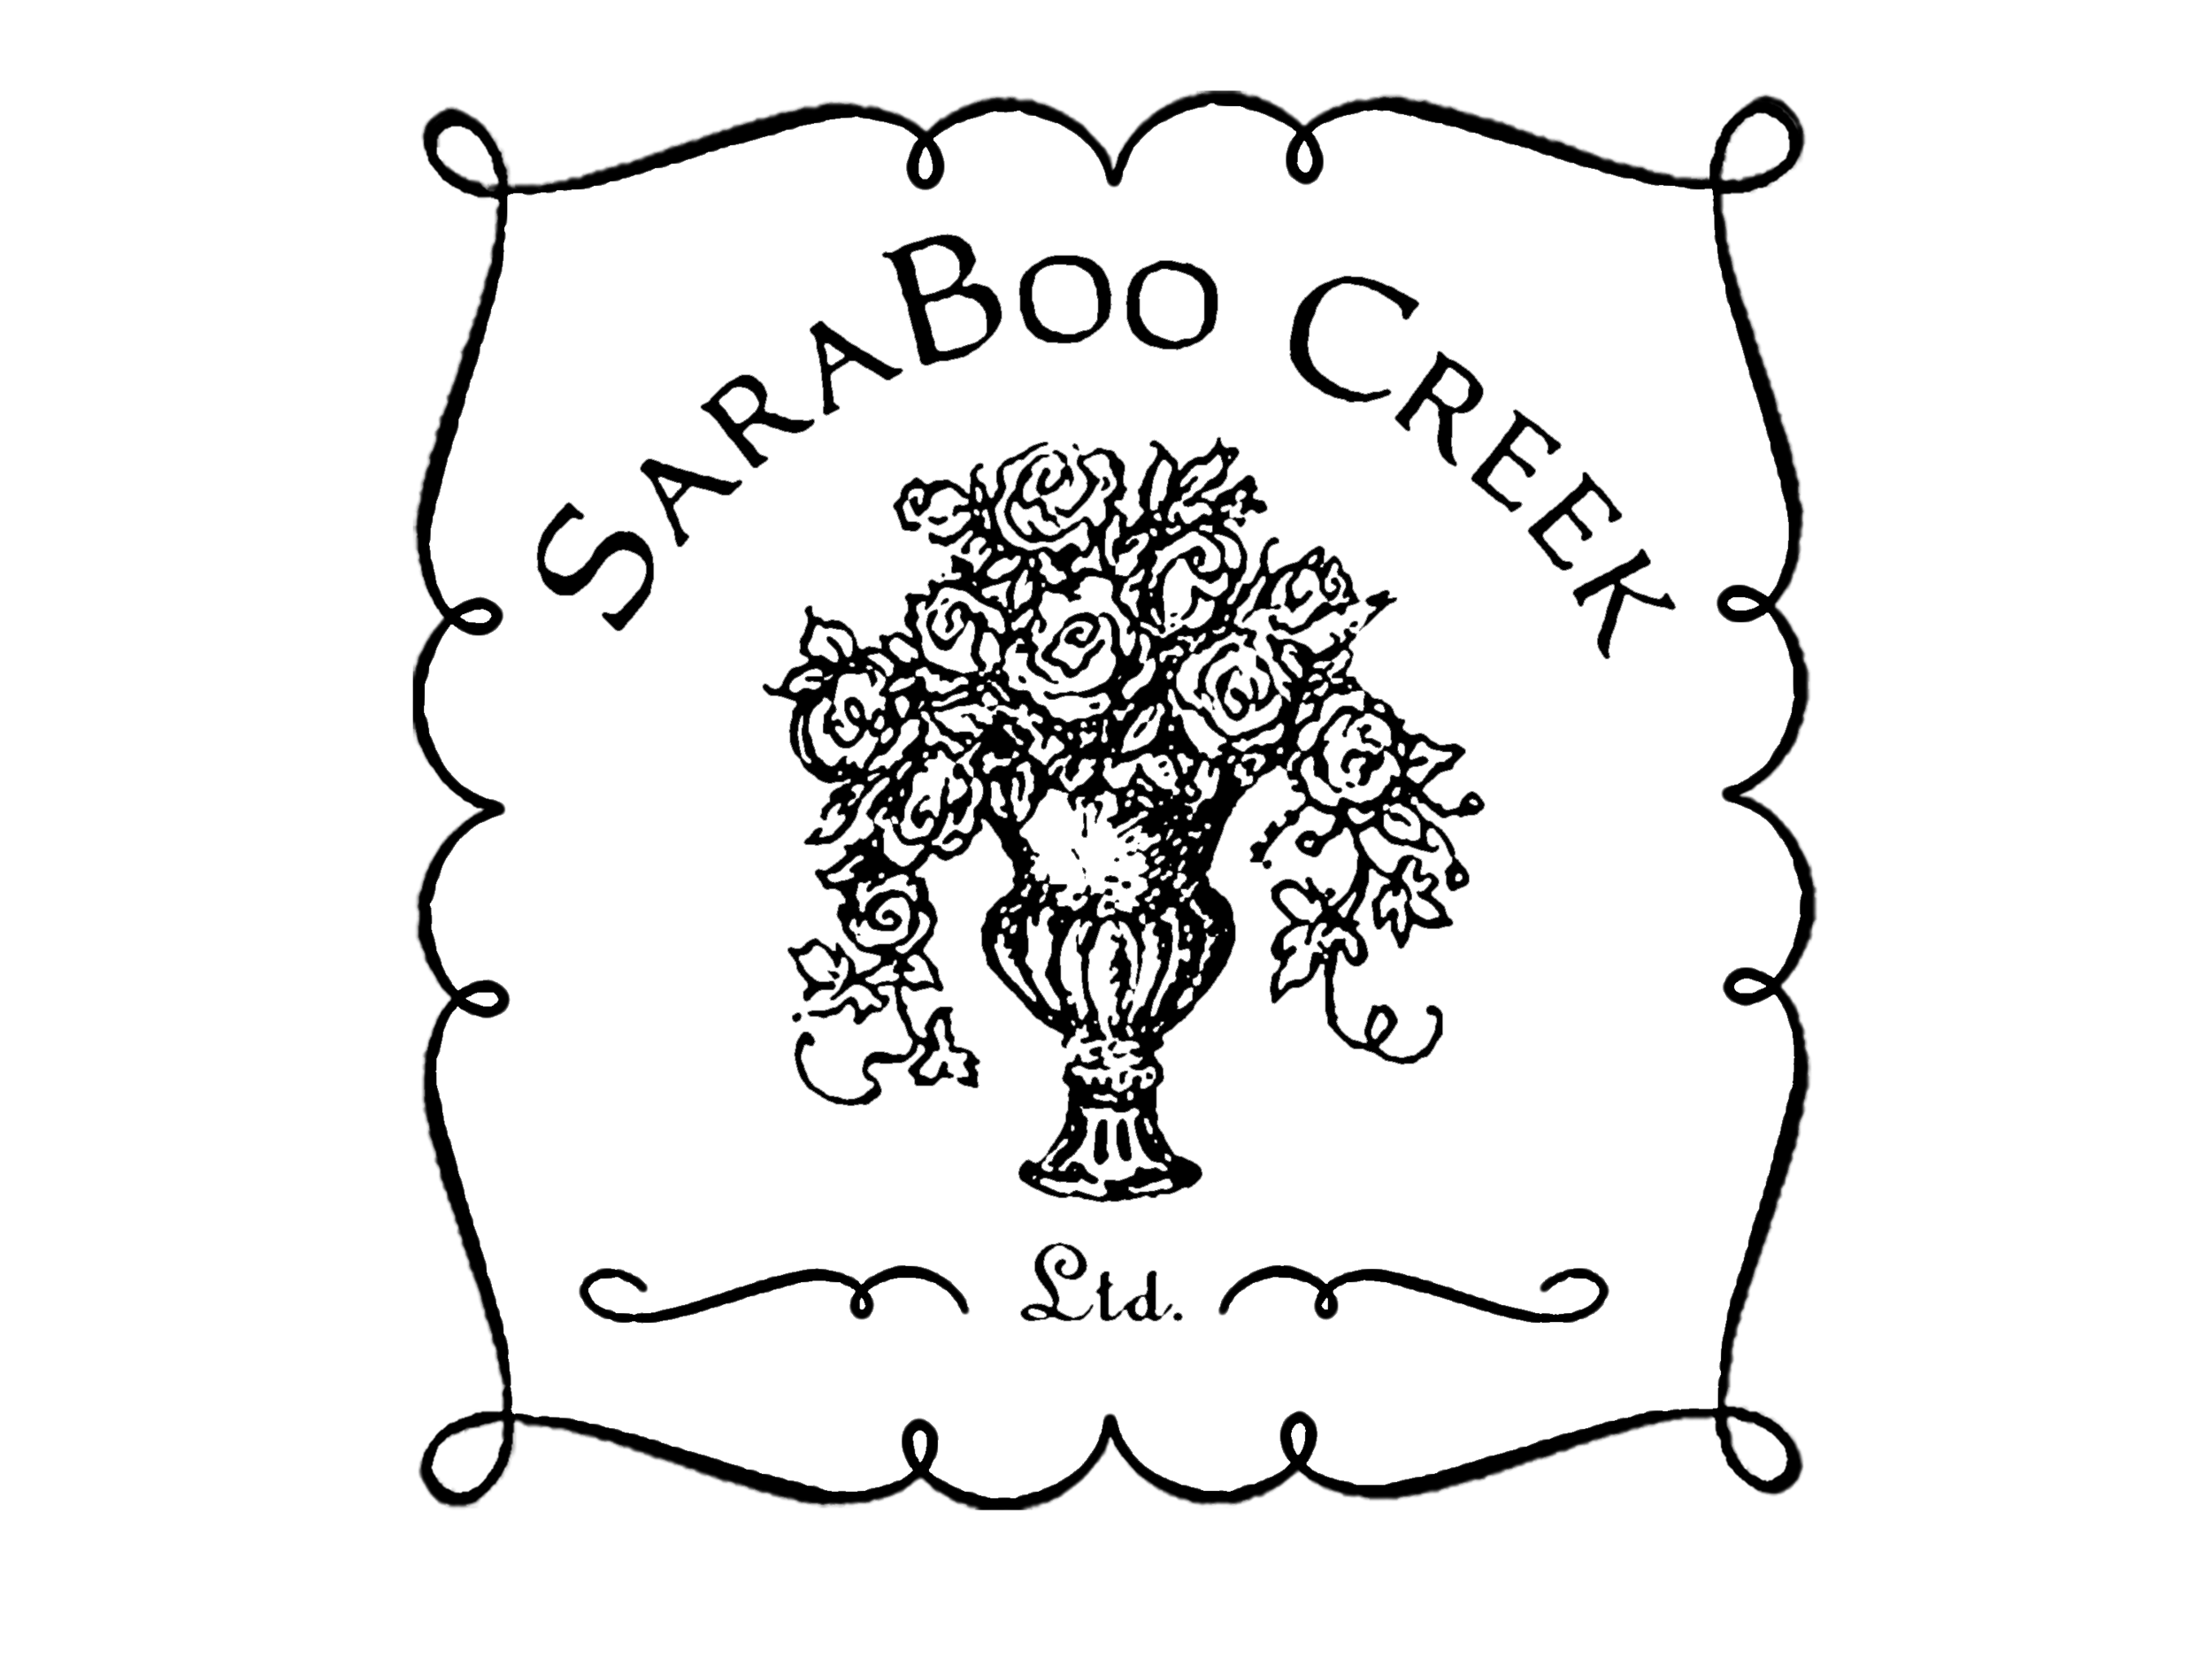 SaraBoo Creek